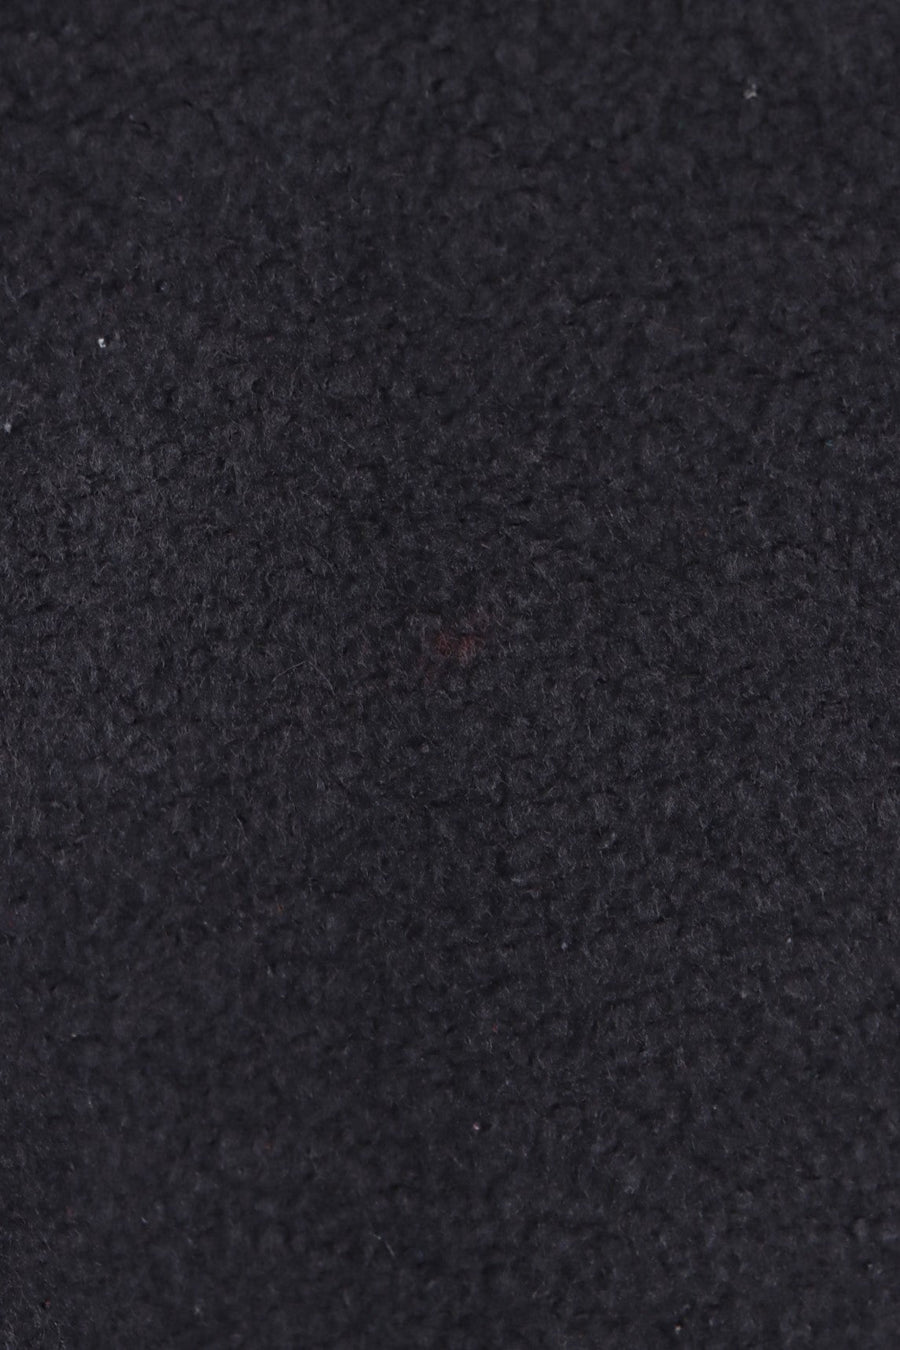 CHAMPION Embroidered Outline Logo Black Sweatshirt (L)